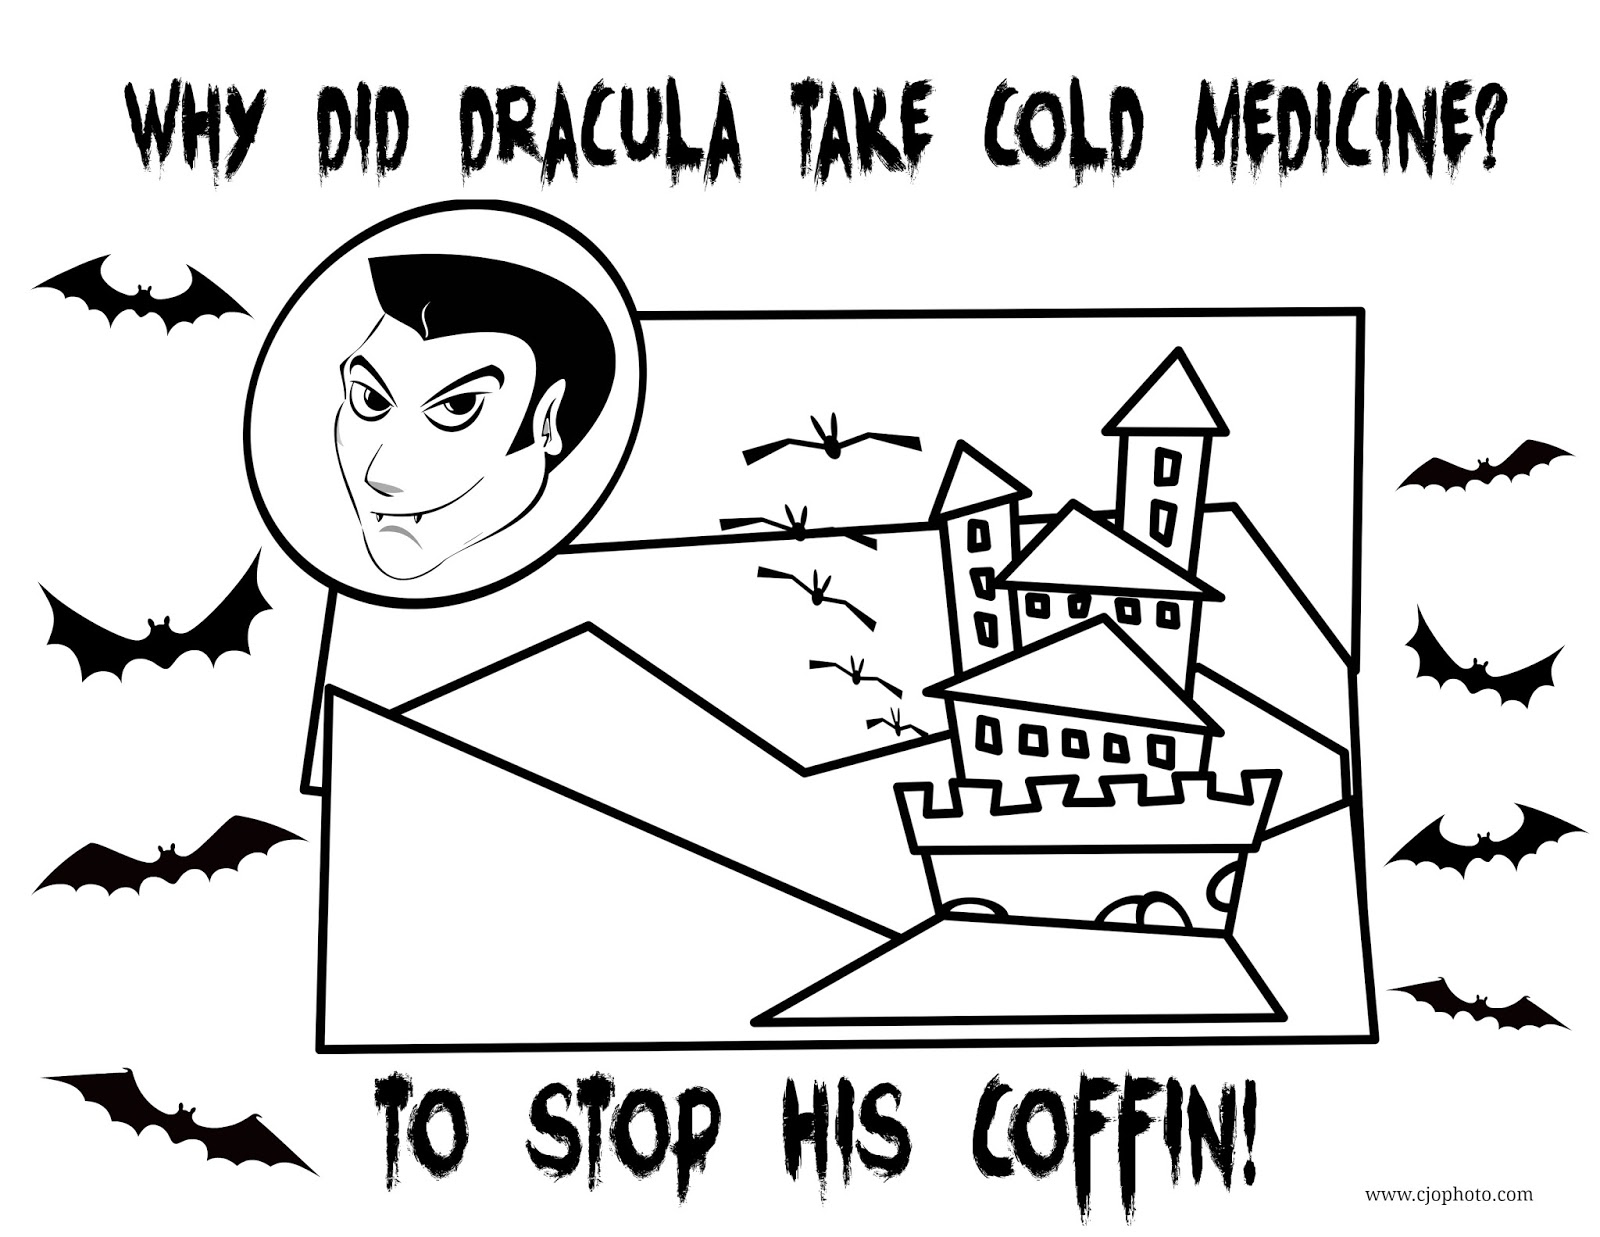 Download CJO Photo: Halloween Joke Coloring Page: Dracula Joke